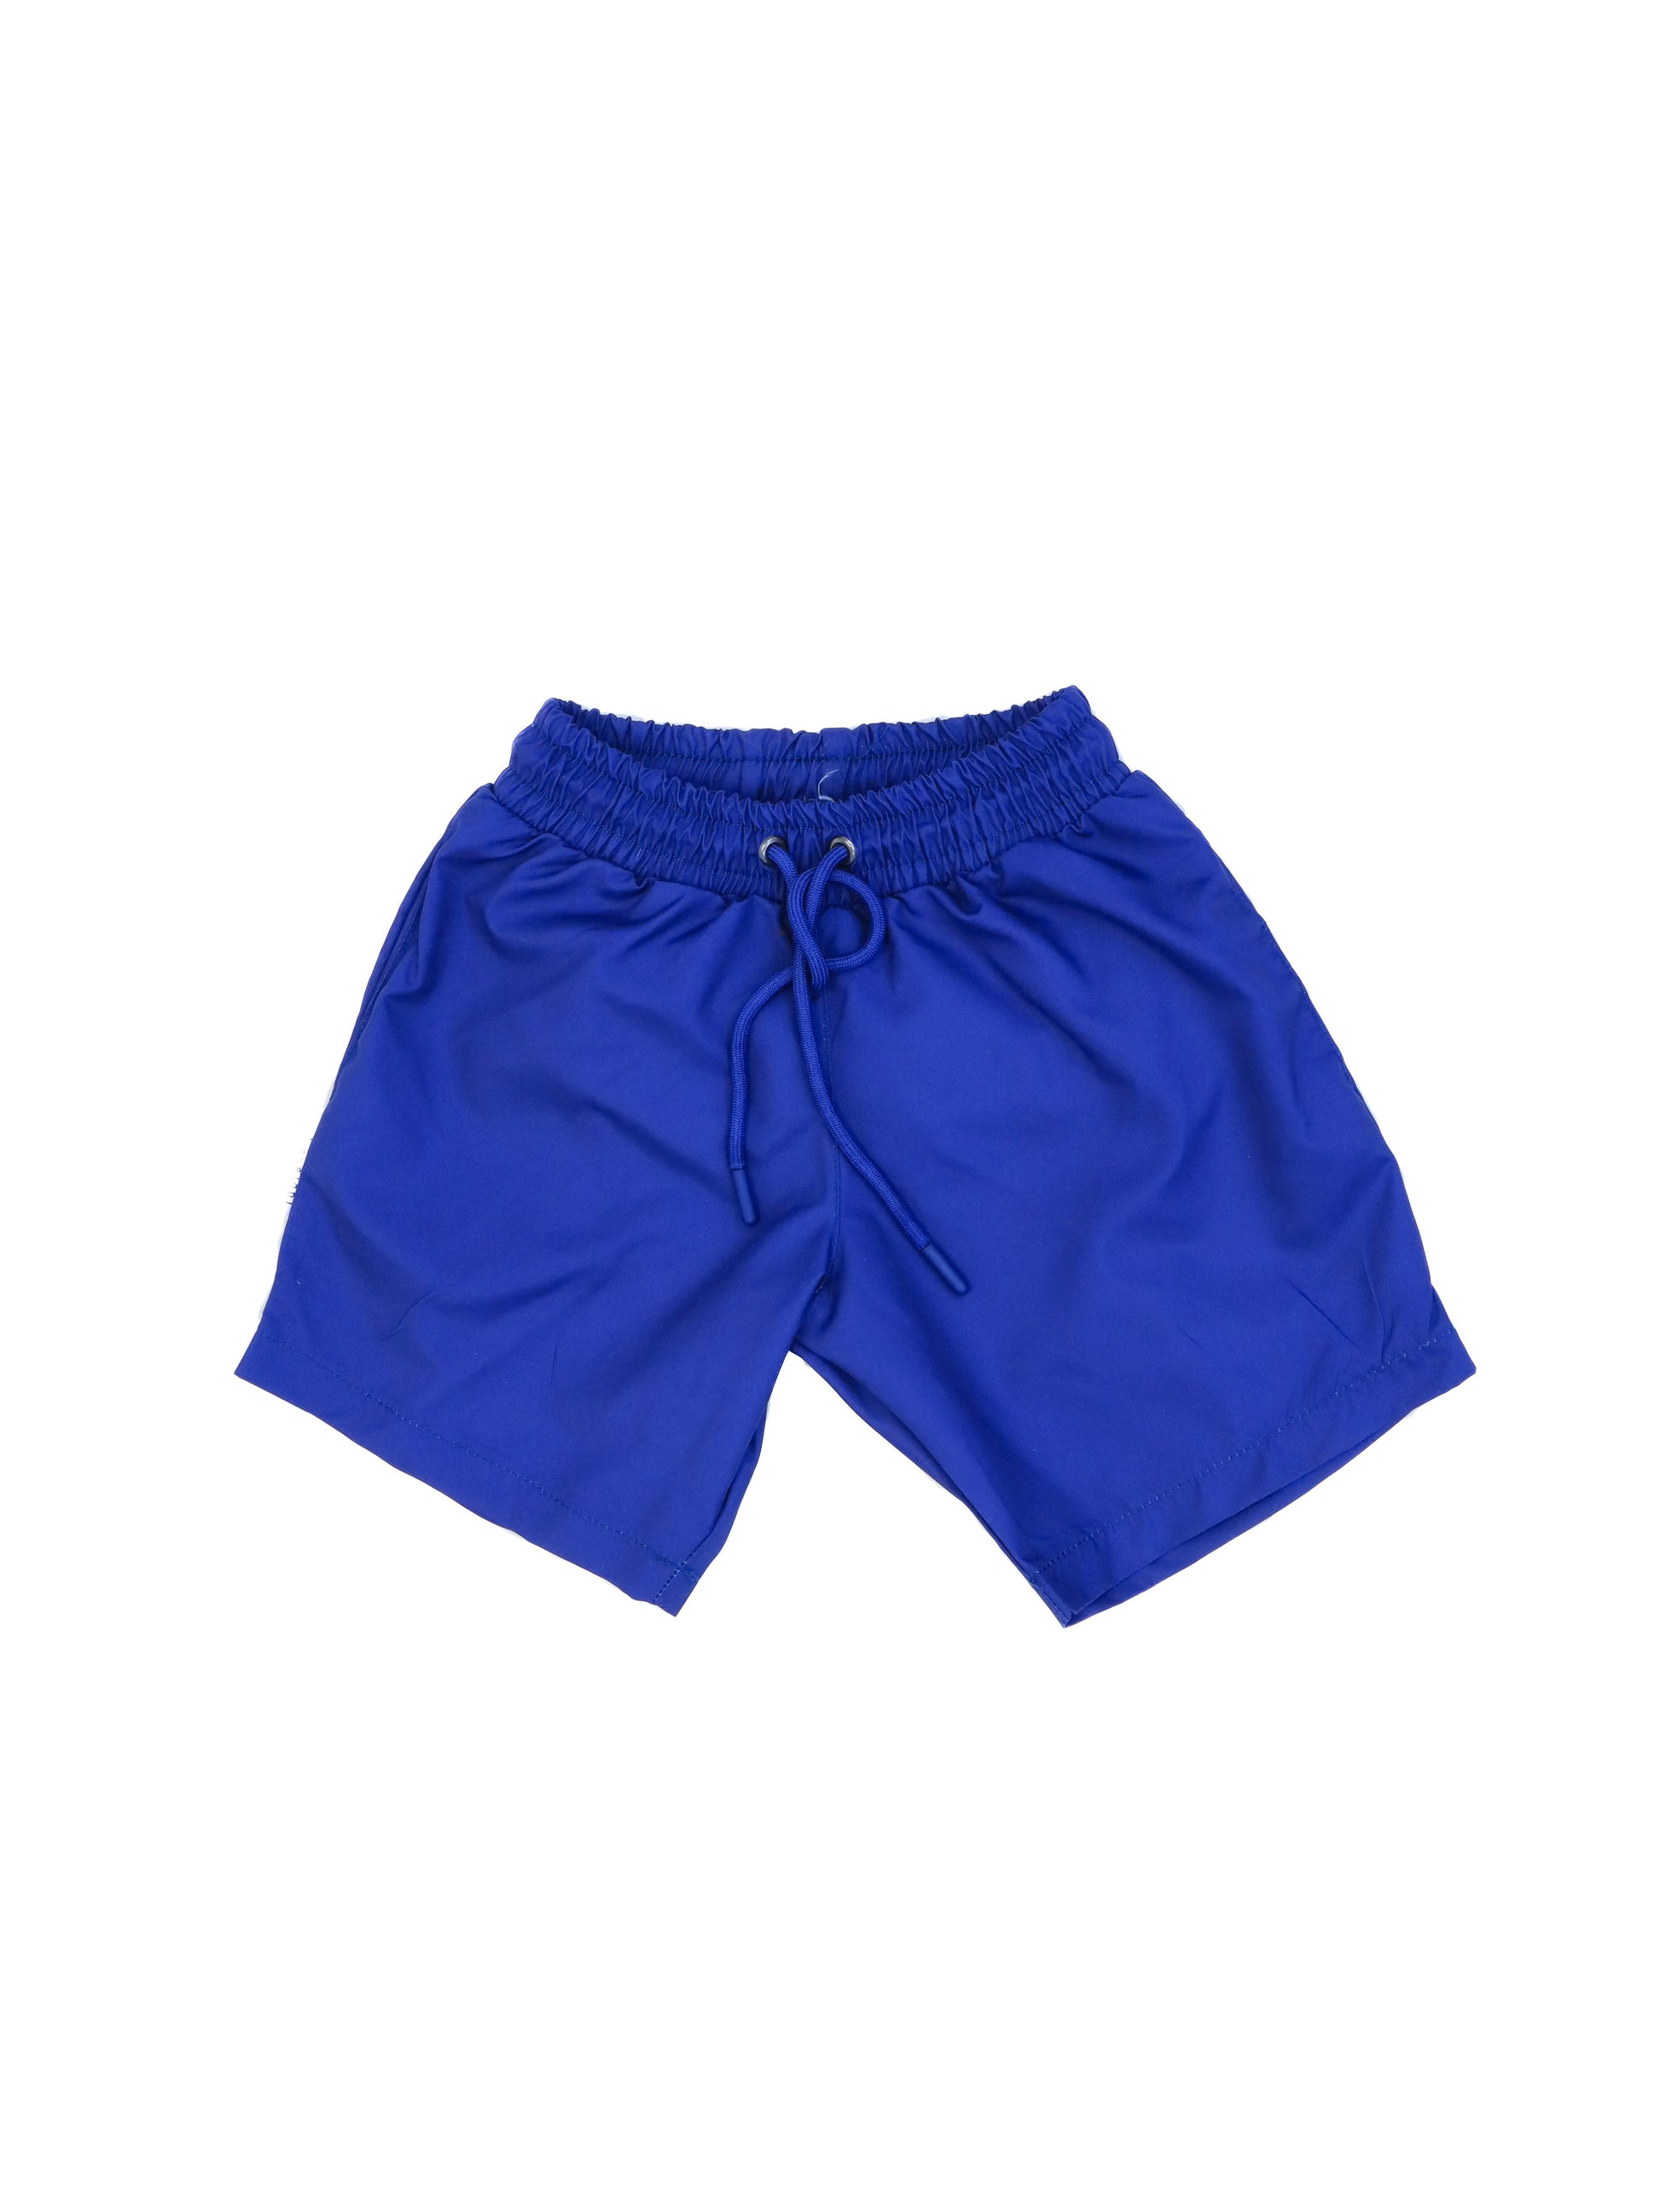 Unisex Kids Quick Drying Swim Shorts